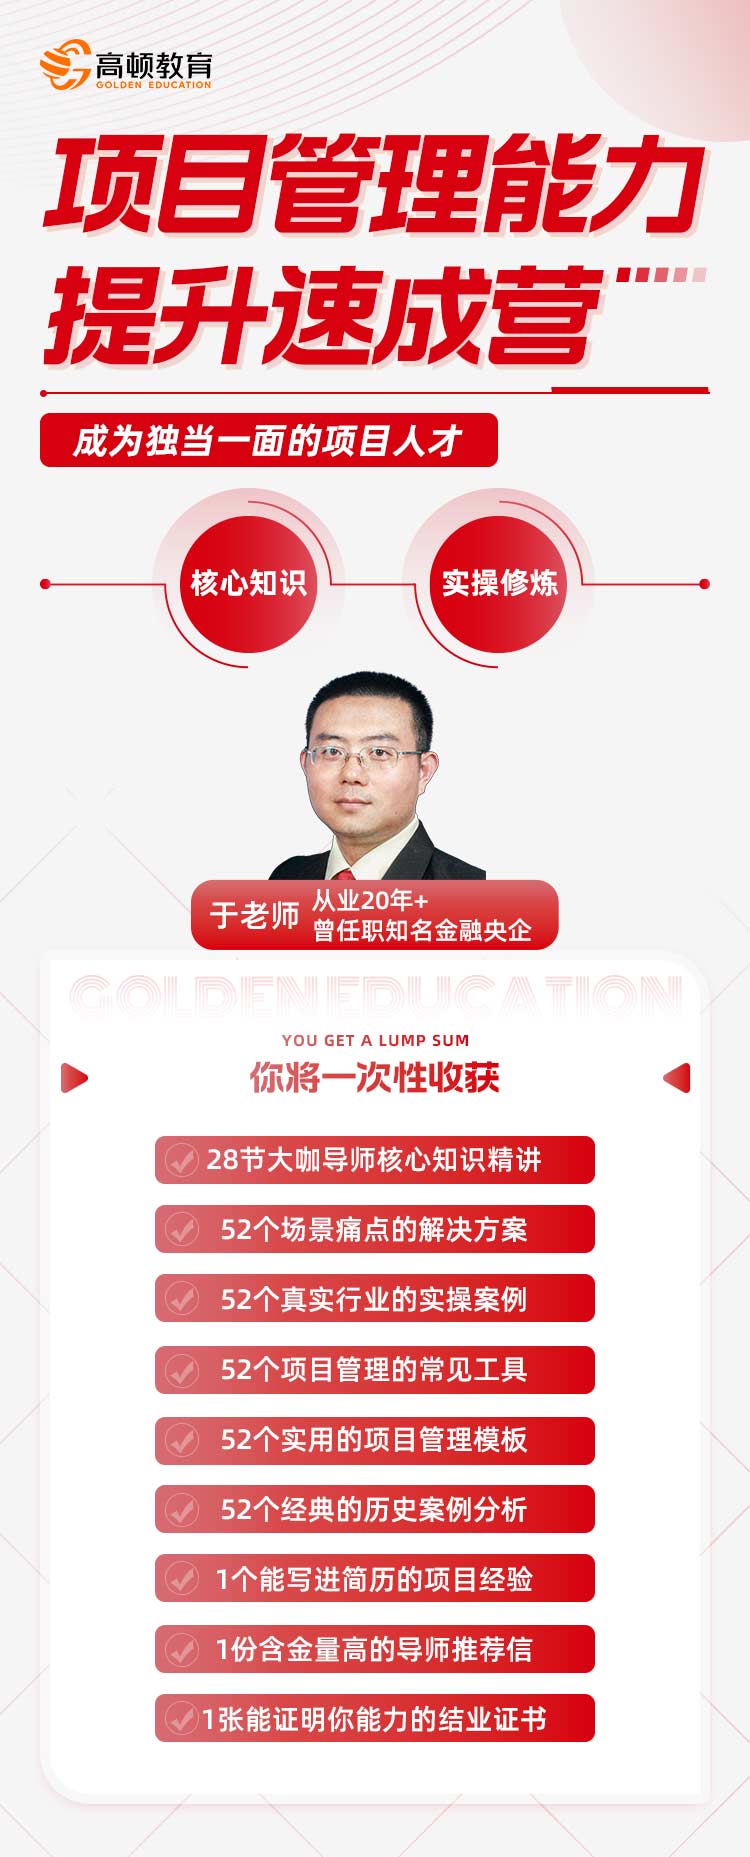 https://simg01.gaodunwangxiao.com/uploadfiles/product-center/202212/12/6ce48_20221212155557.jpeg